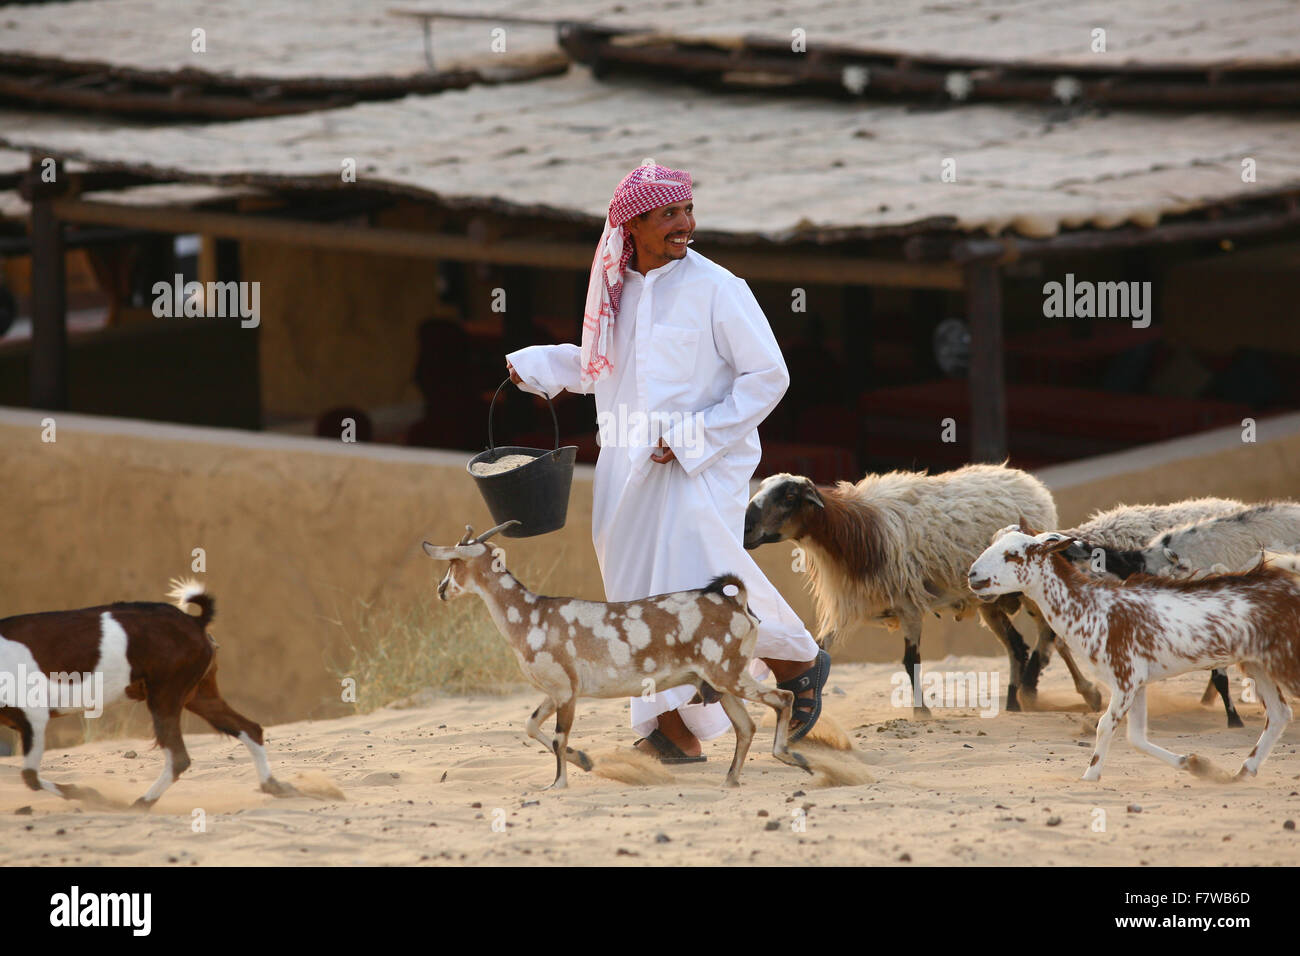 Arab Man Feeding Animal in Jumeirah Bab Al Shams, Dubai, United Arab Emirates Stock Photo